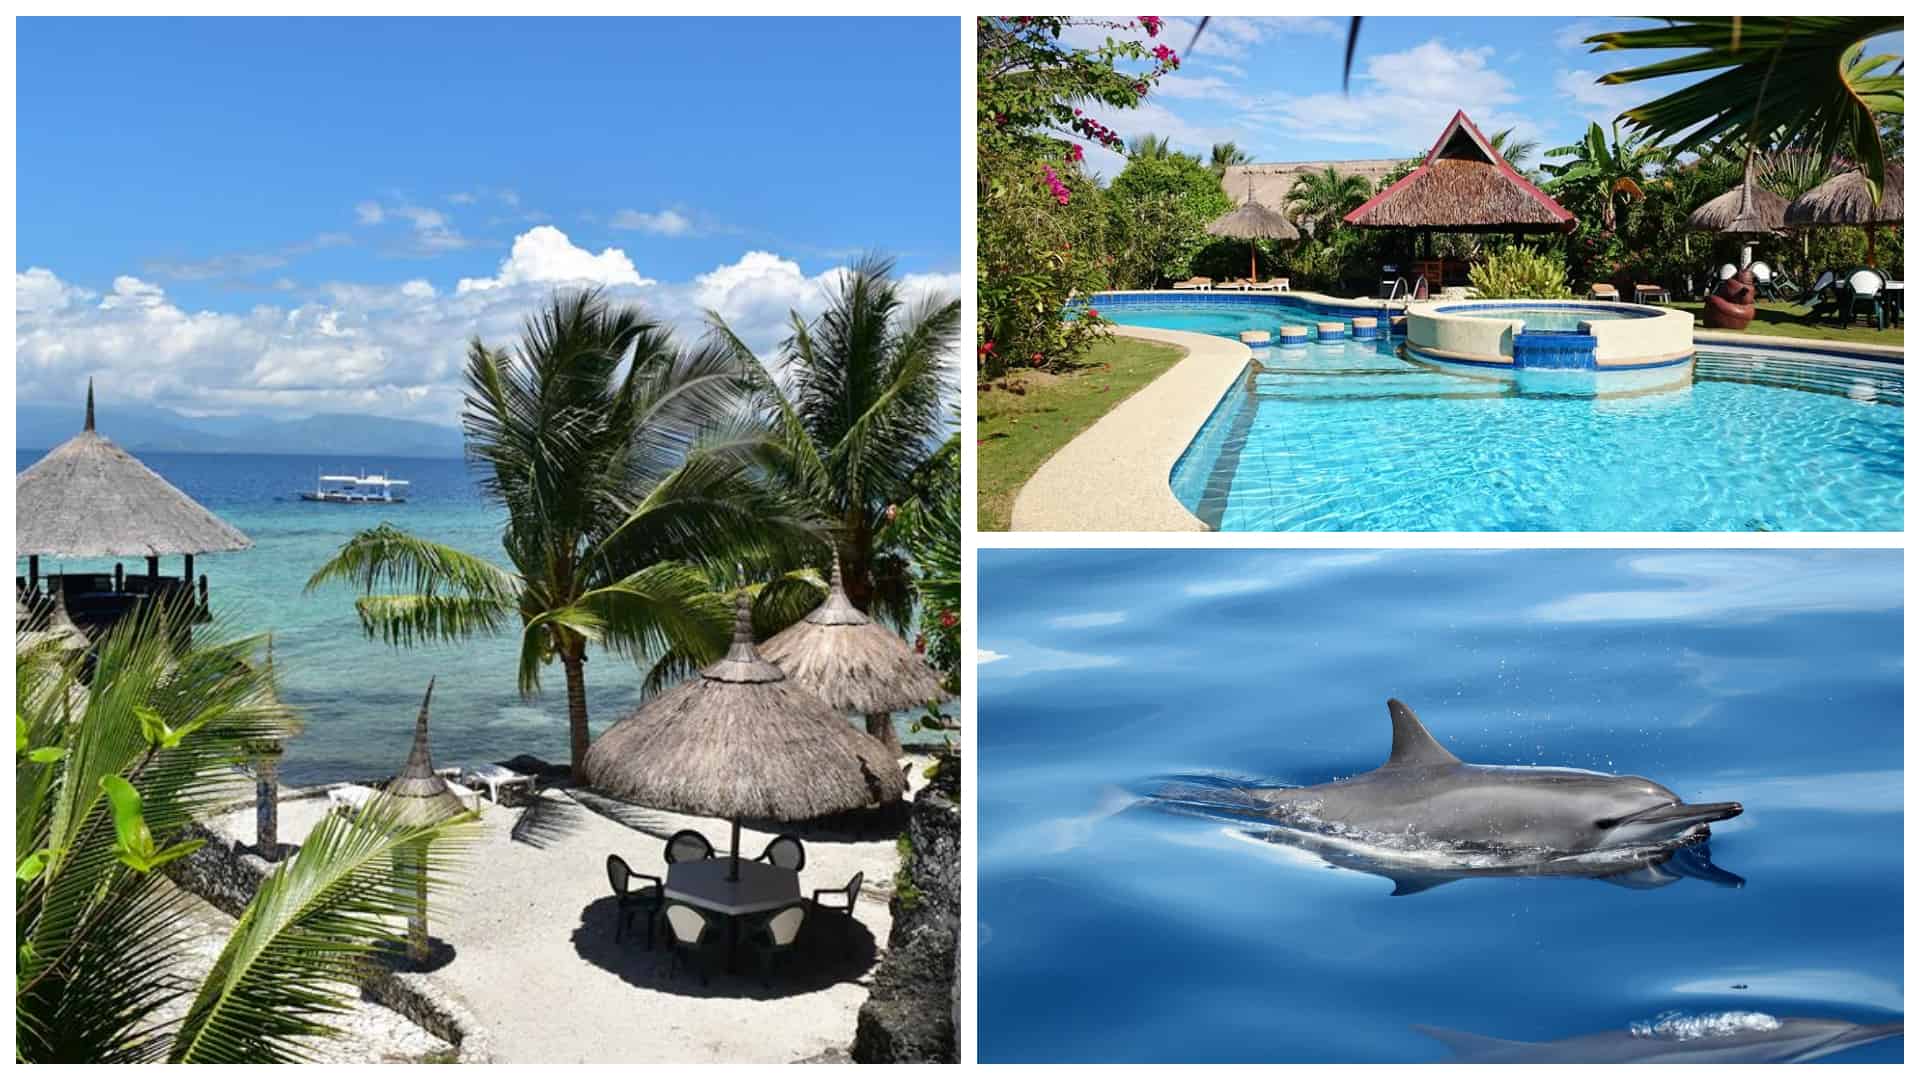 Dolphin House Resort Moalboal Cebu